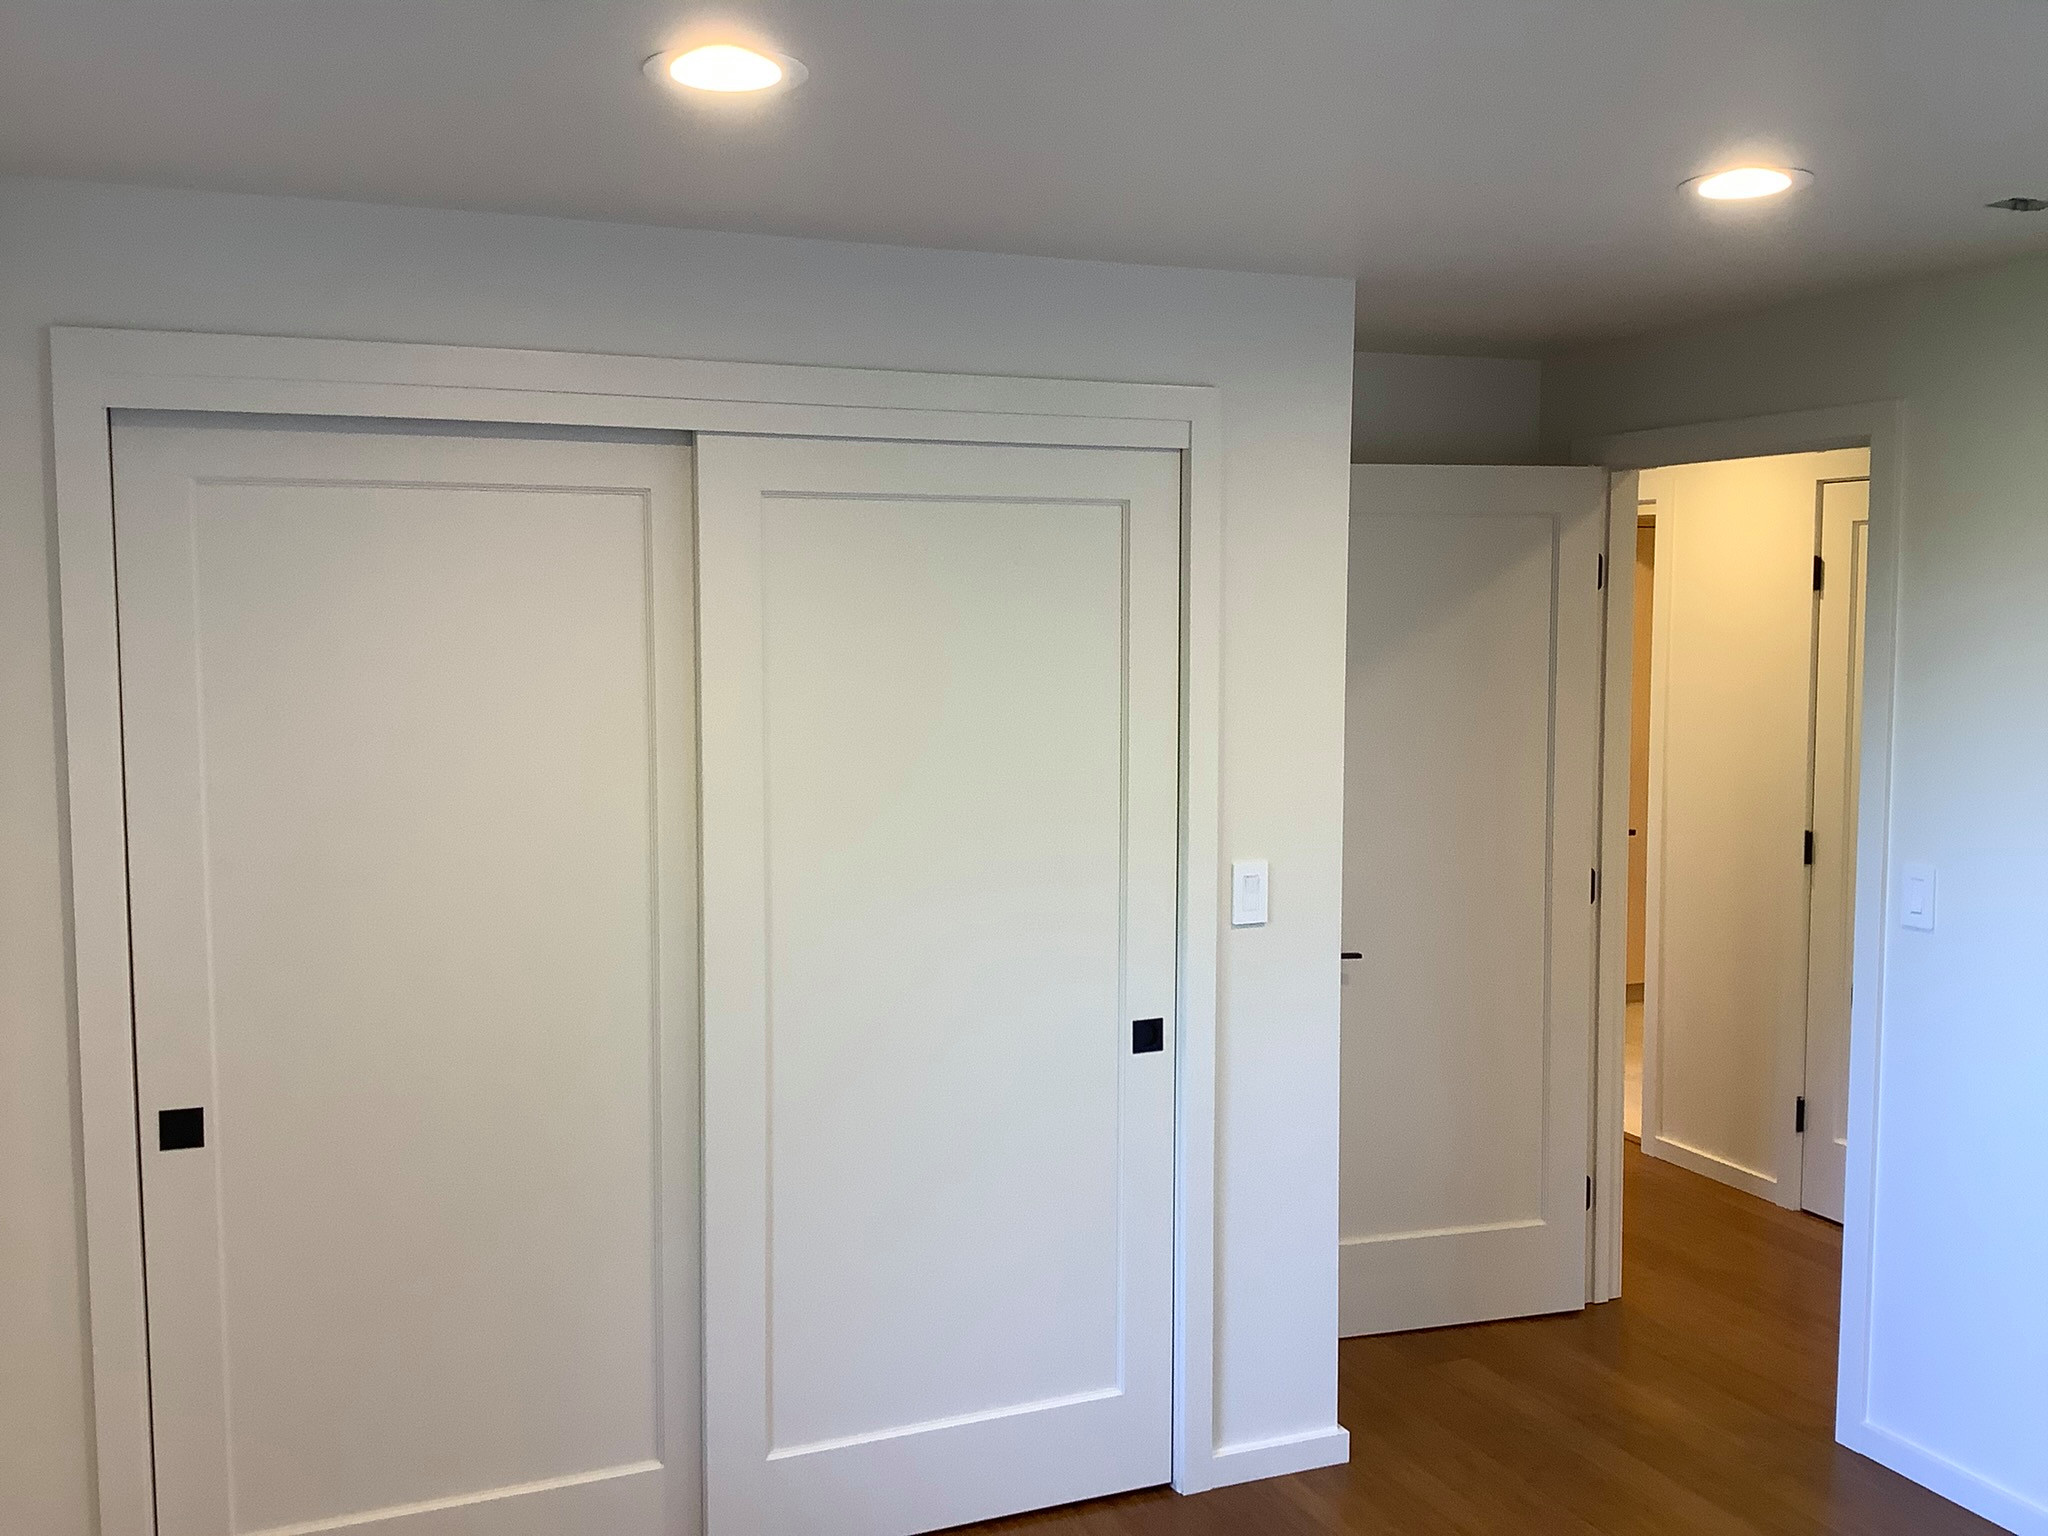 Bedrooms and Hallway Remodel